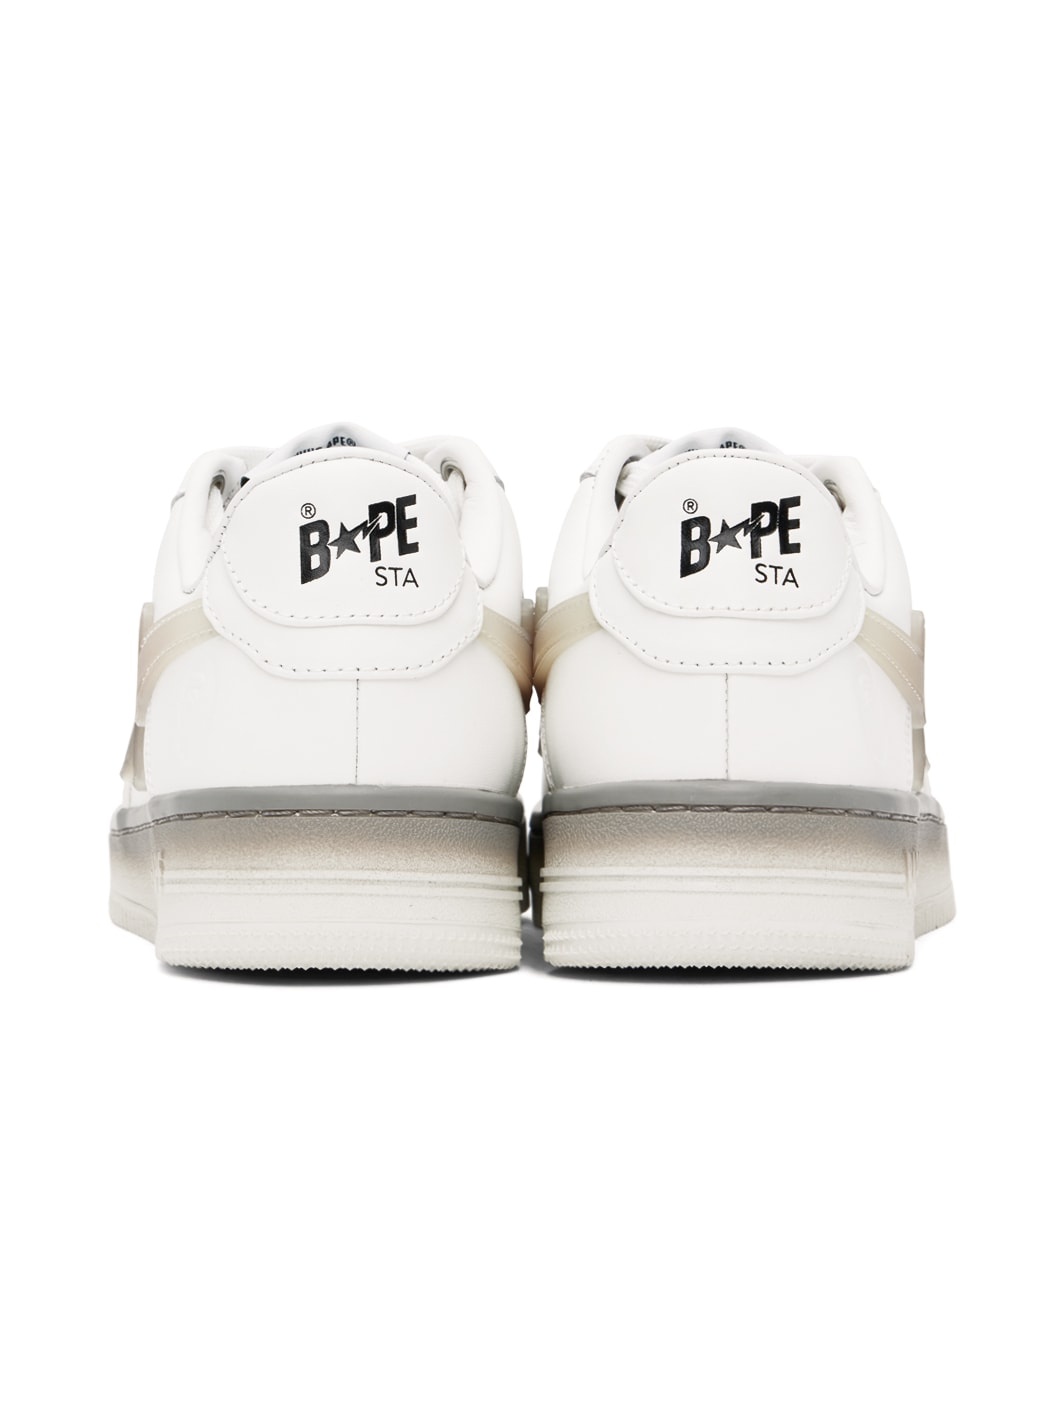 White Sta #5 Sneakers - 2